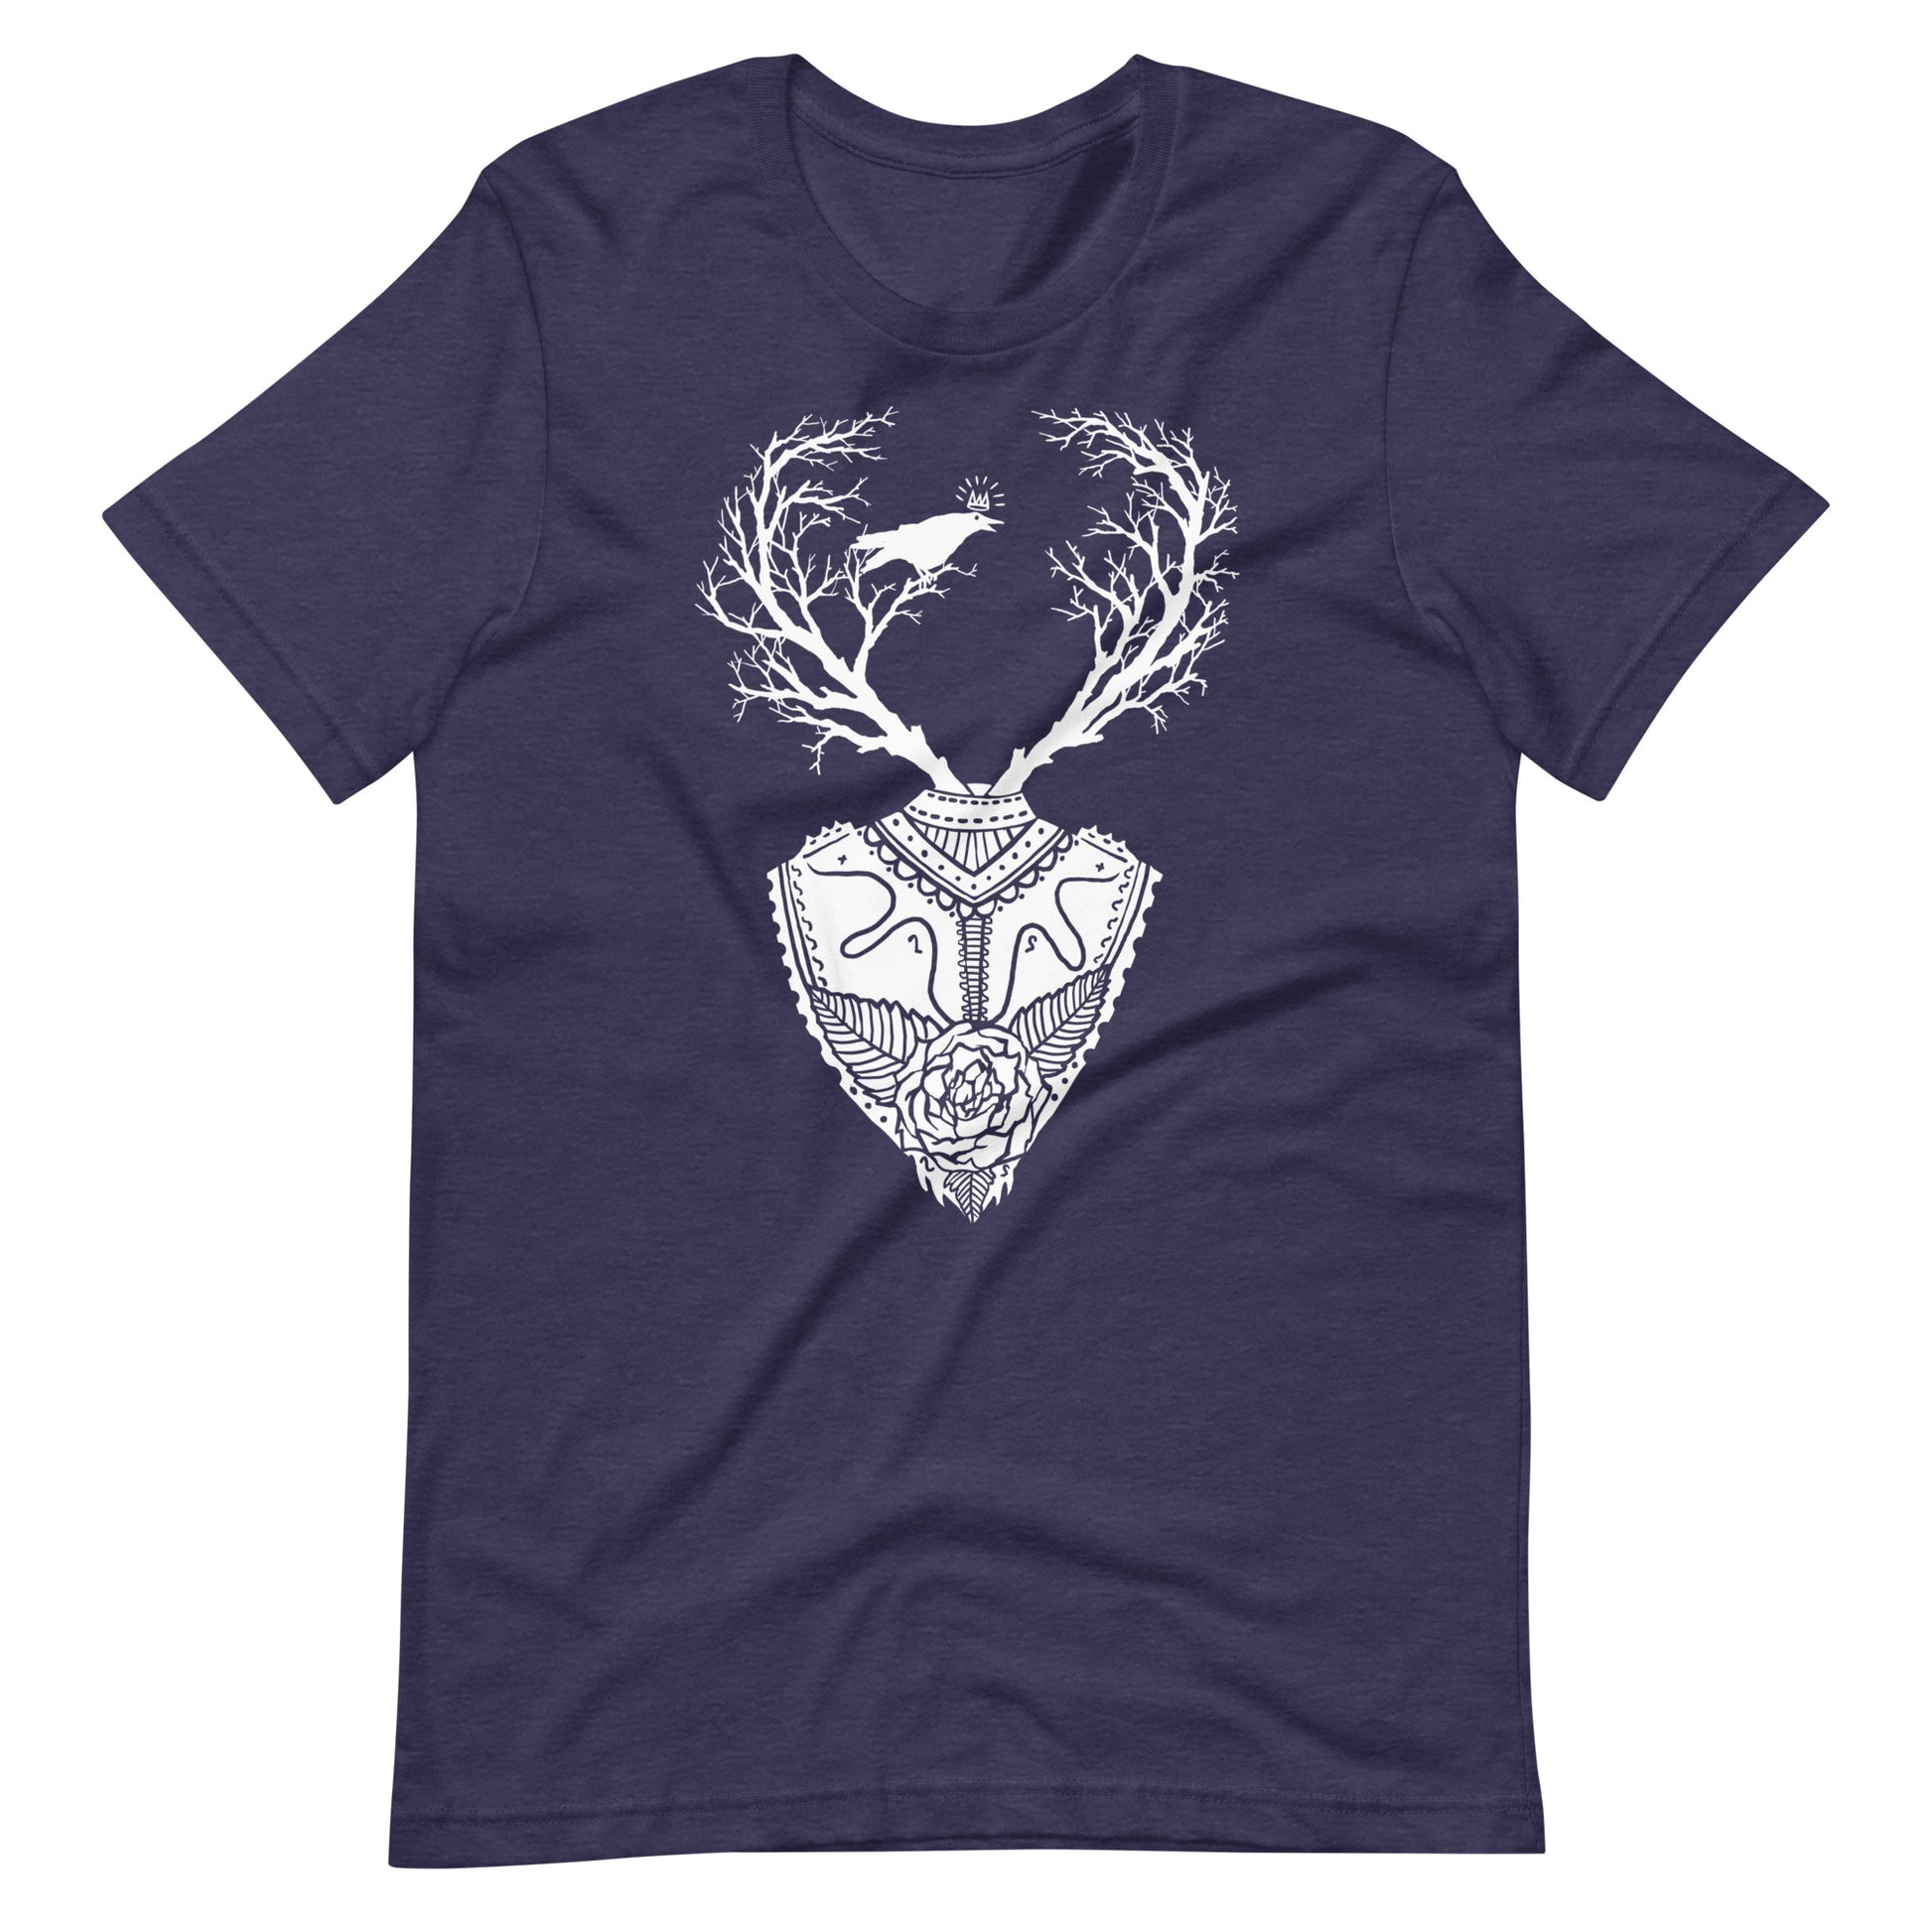 Life Trees White - Men's t-shirt - Heather Midnight Navy Front